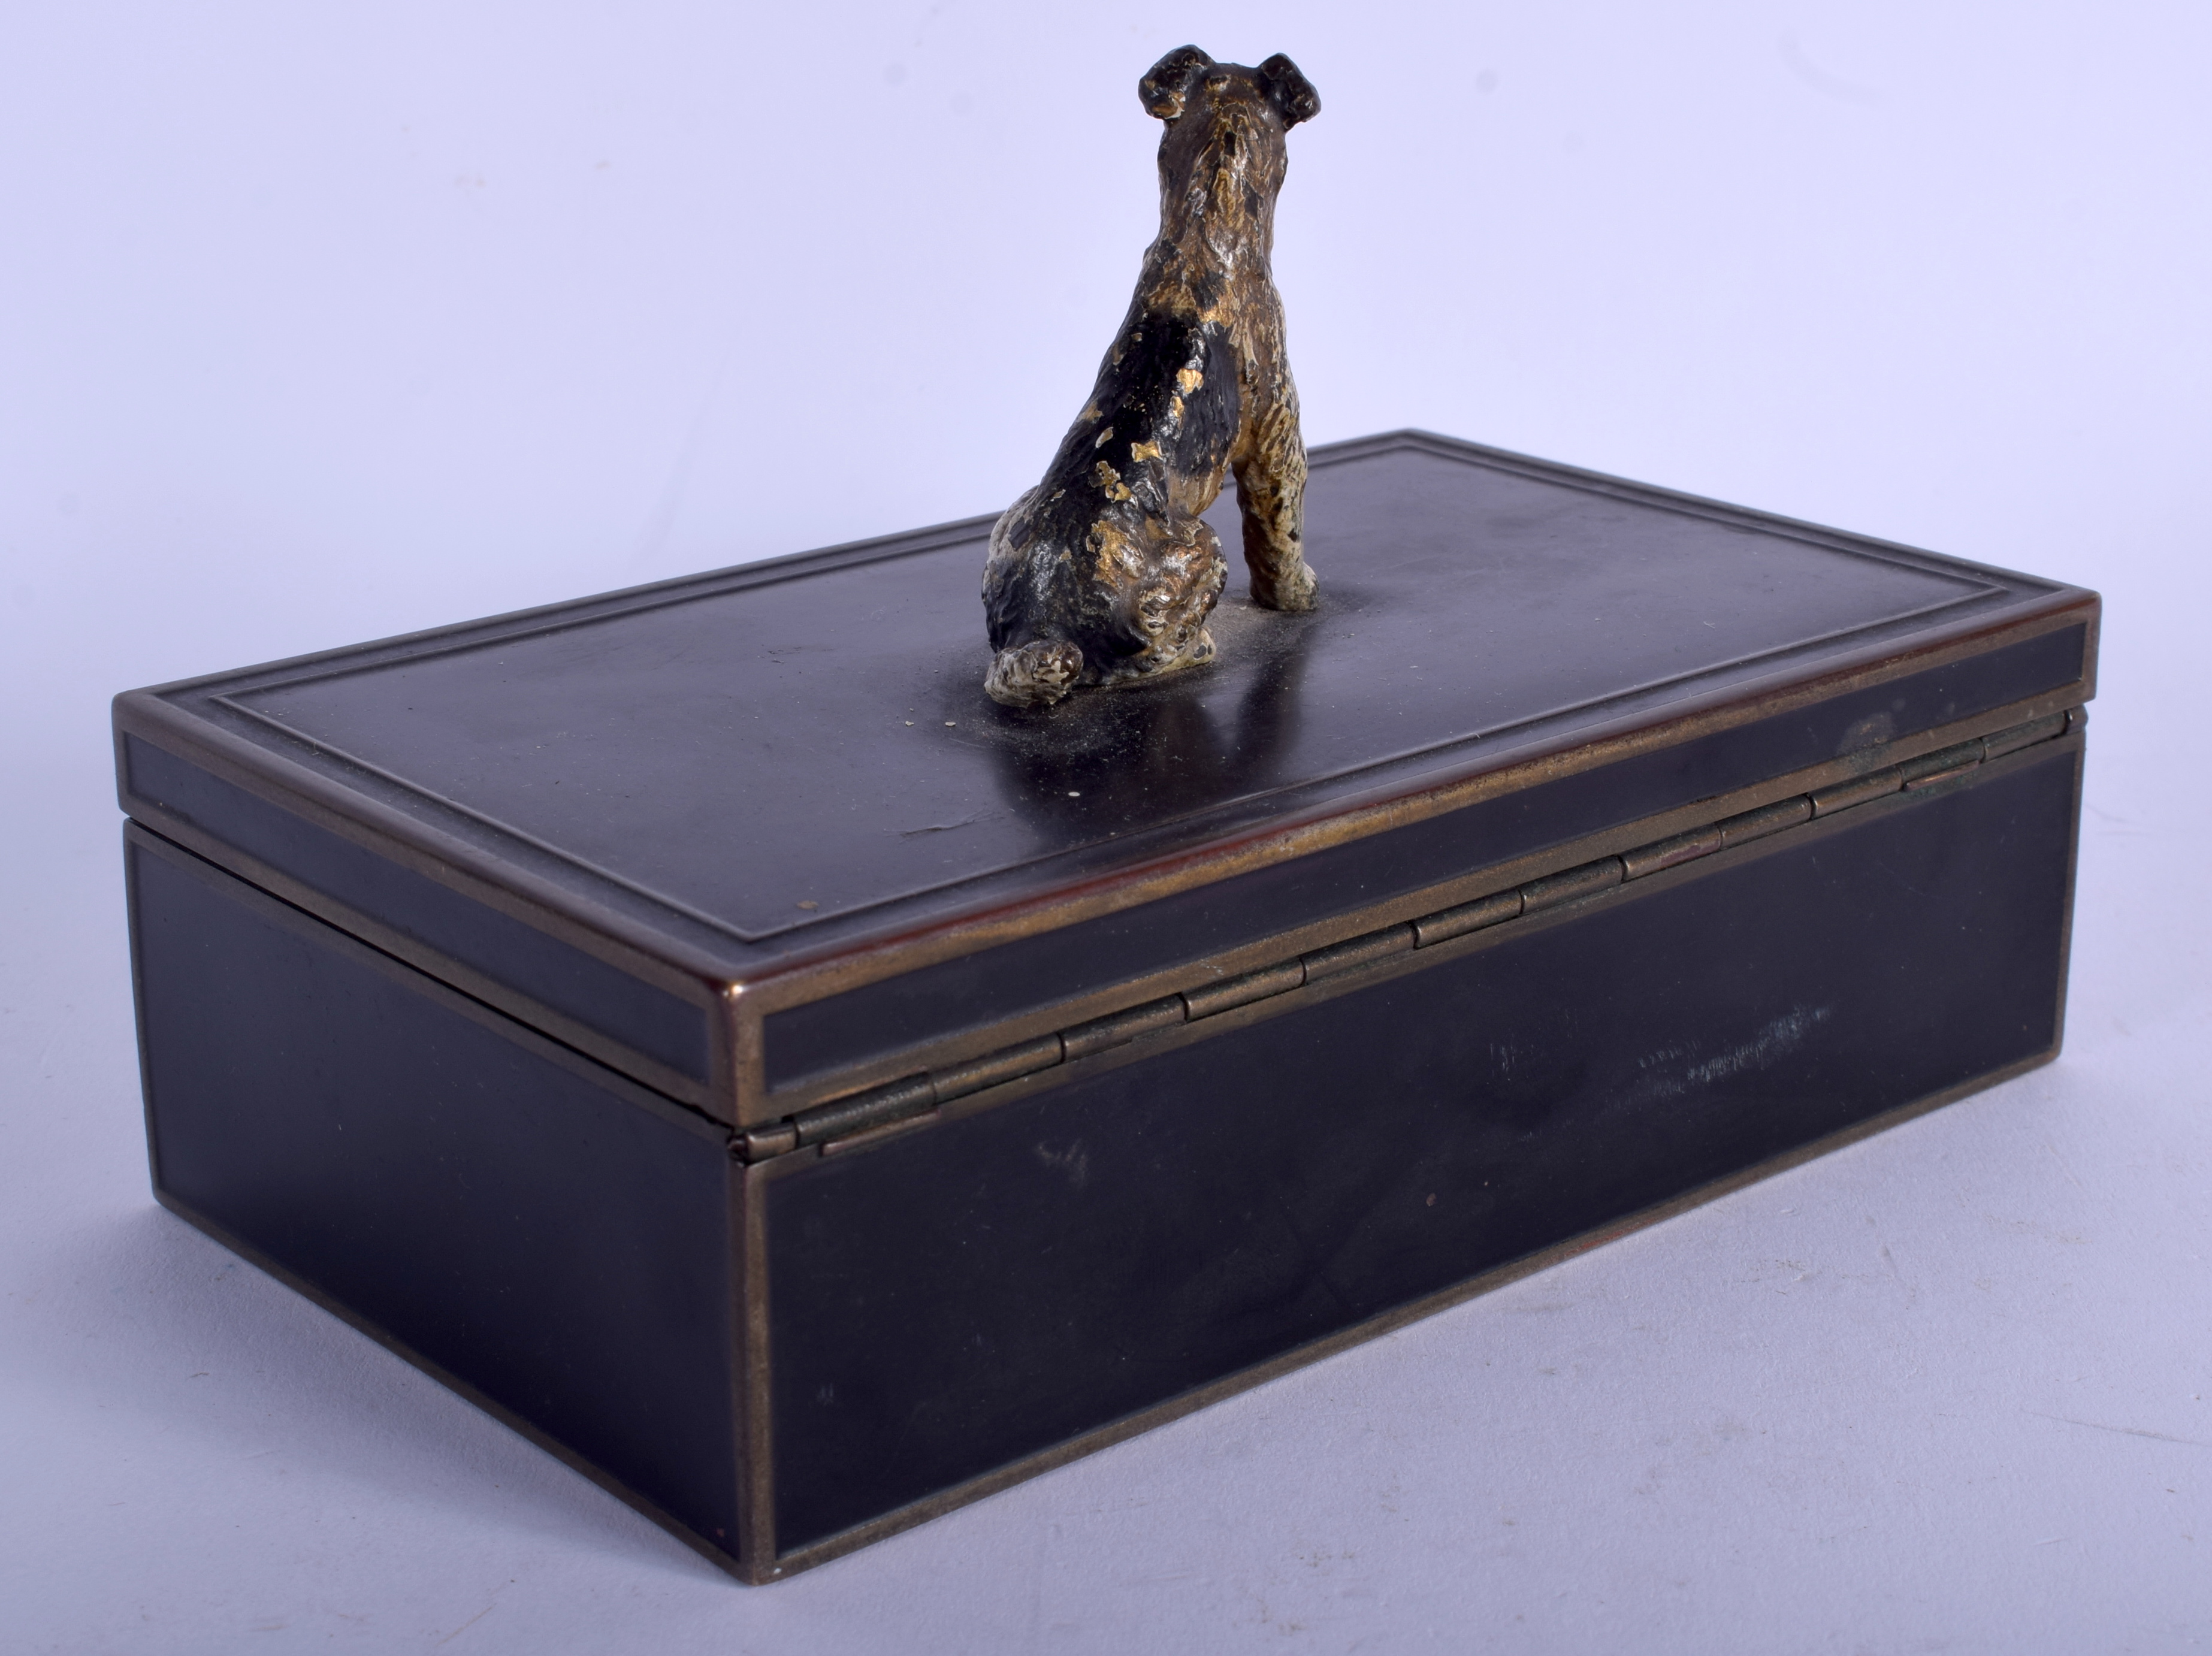 AN ART DECO COLD PAINTED DOGGY CIGARETTE BOX. 15 cm x 11 cm. - Image 2 of 3